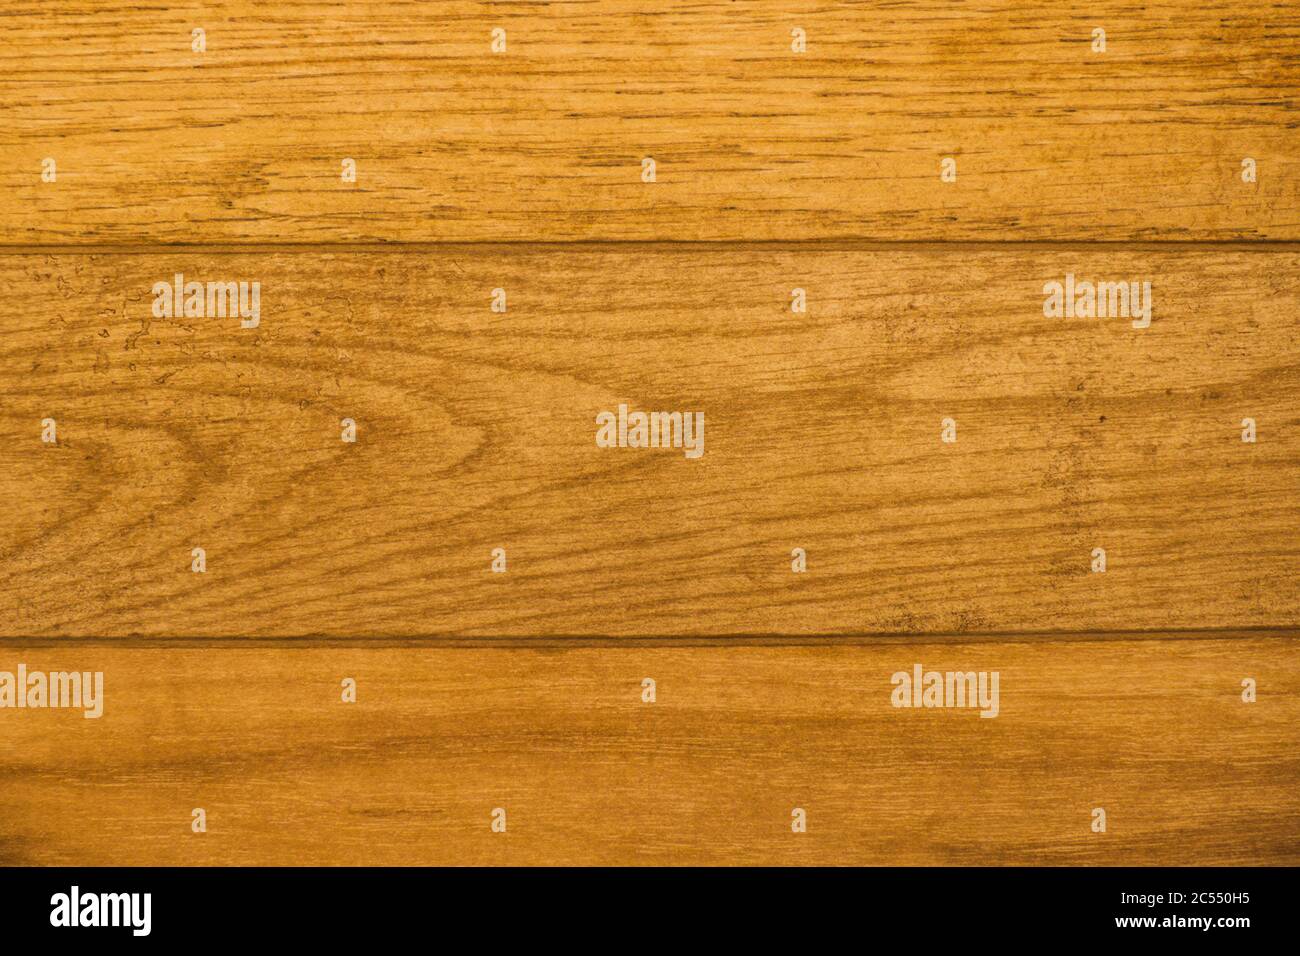 Wood Laminate, Wood Floor Texture, Wood Background, Wooden Parquet Stock Photo